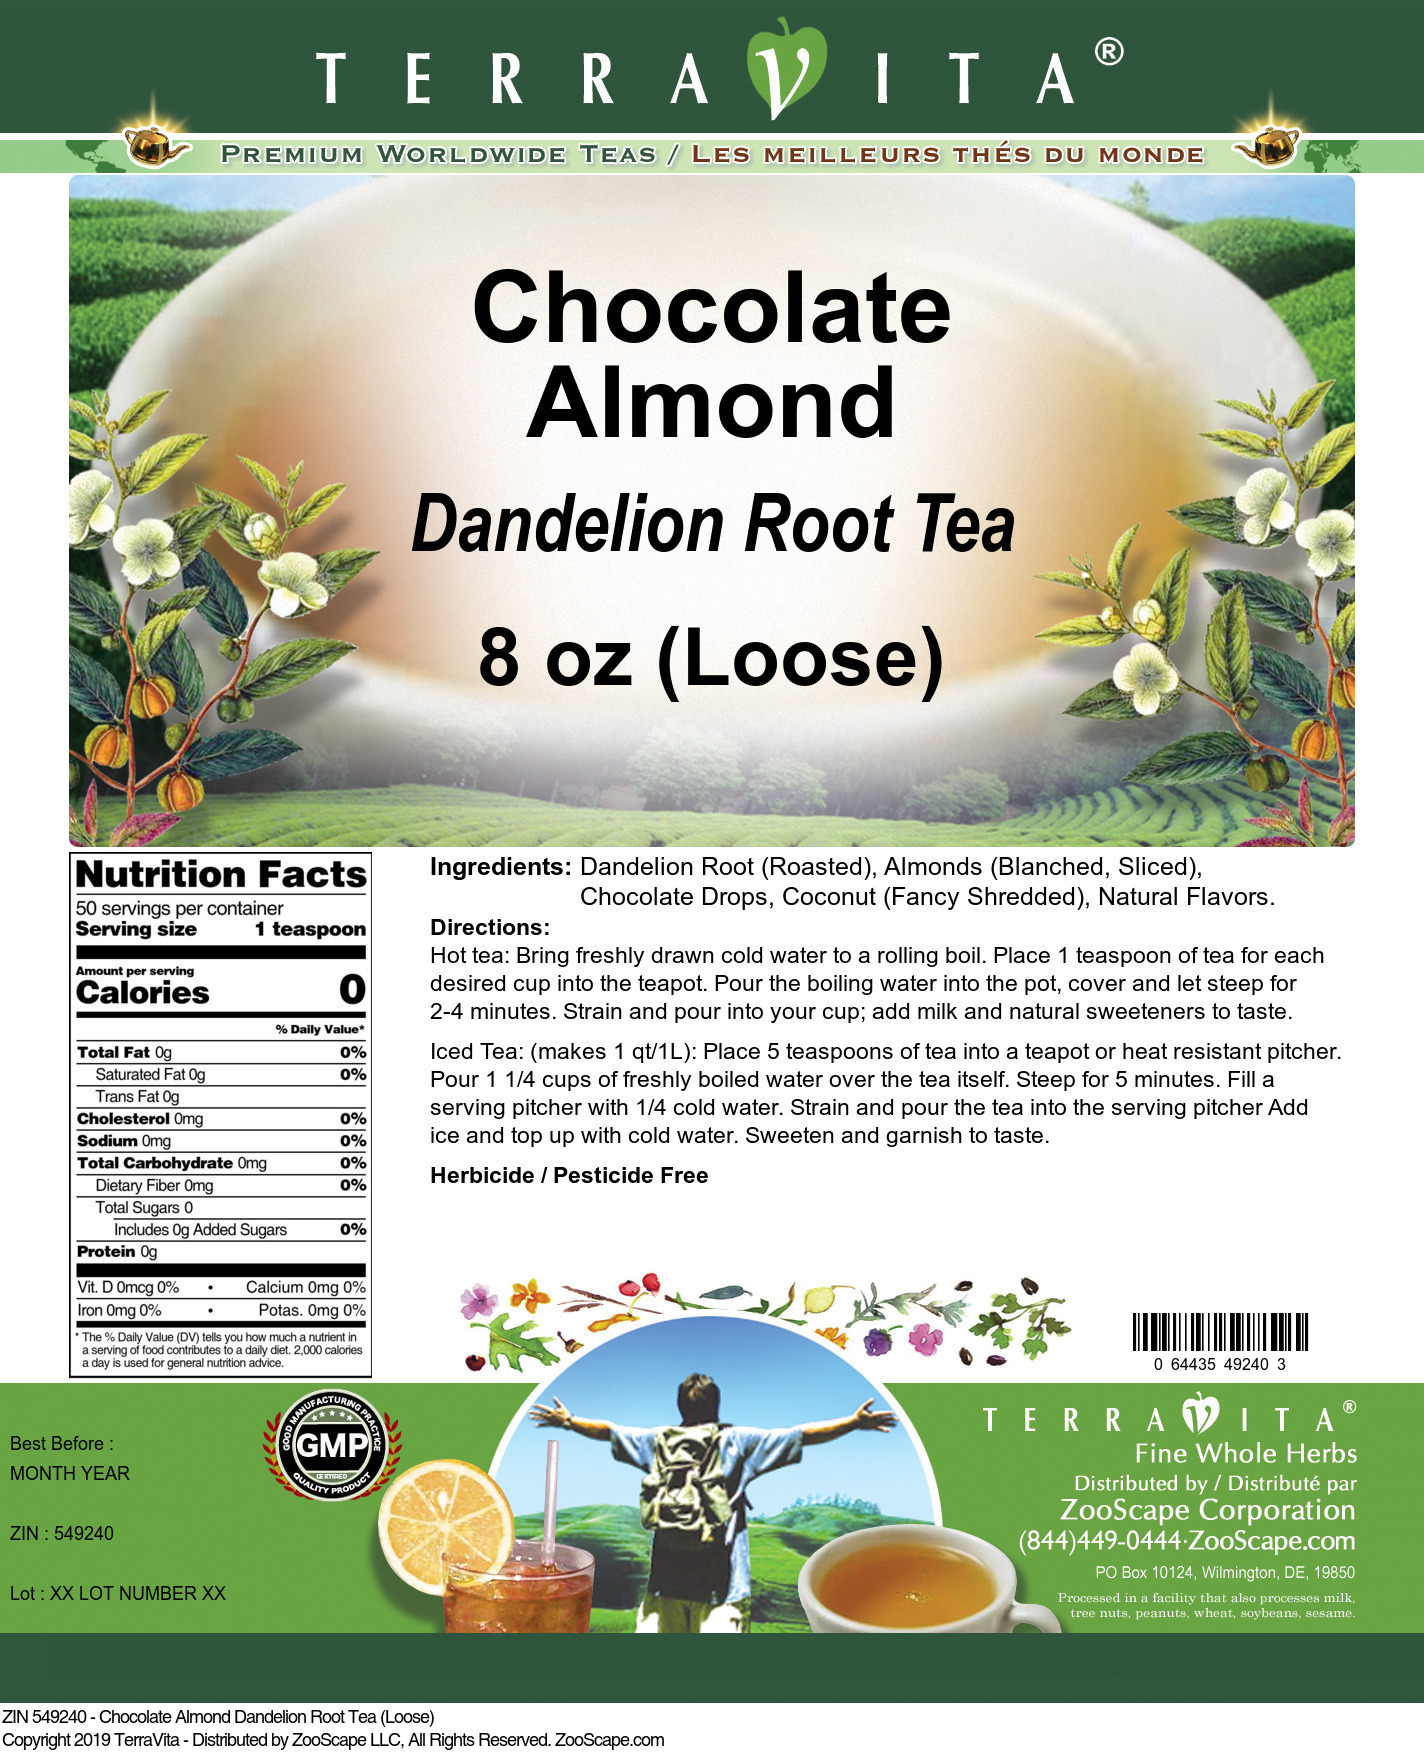 Chocolate Almond Dandelion Root Tea (Loose) - Label